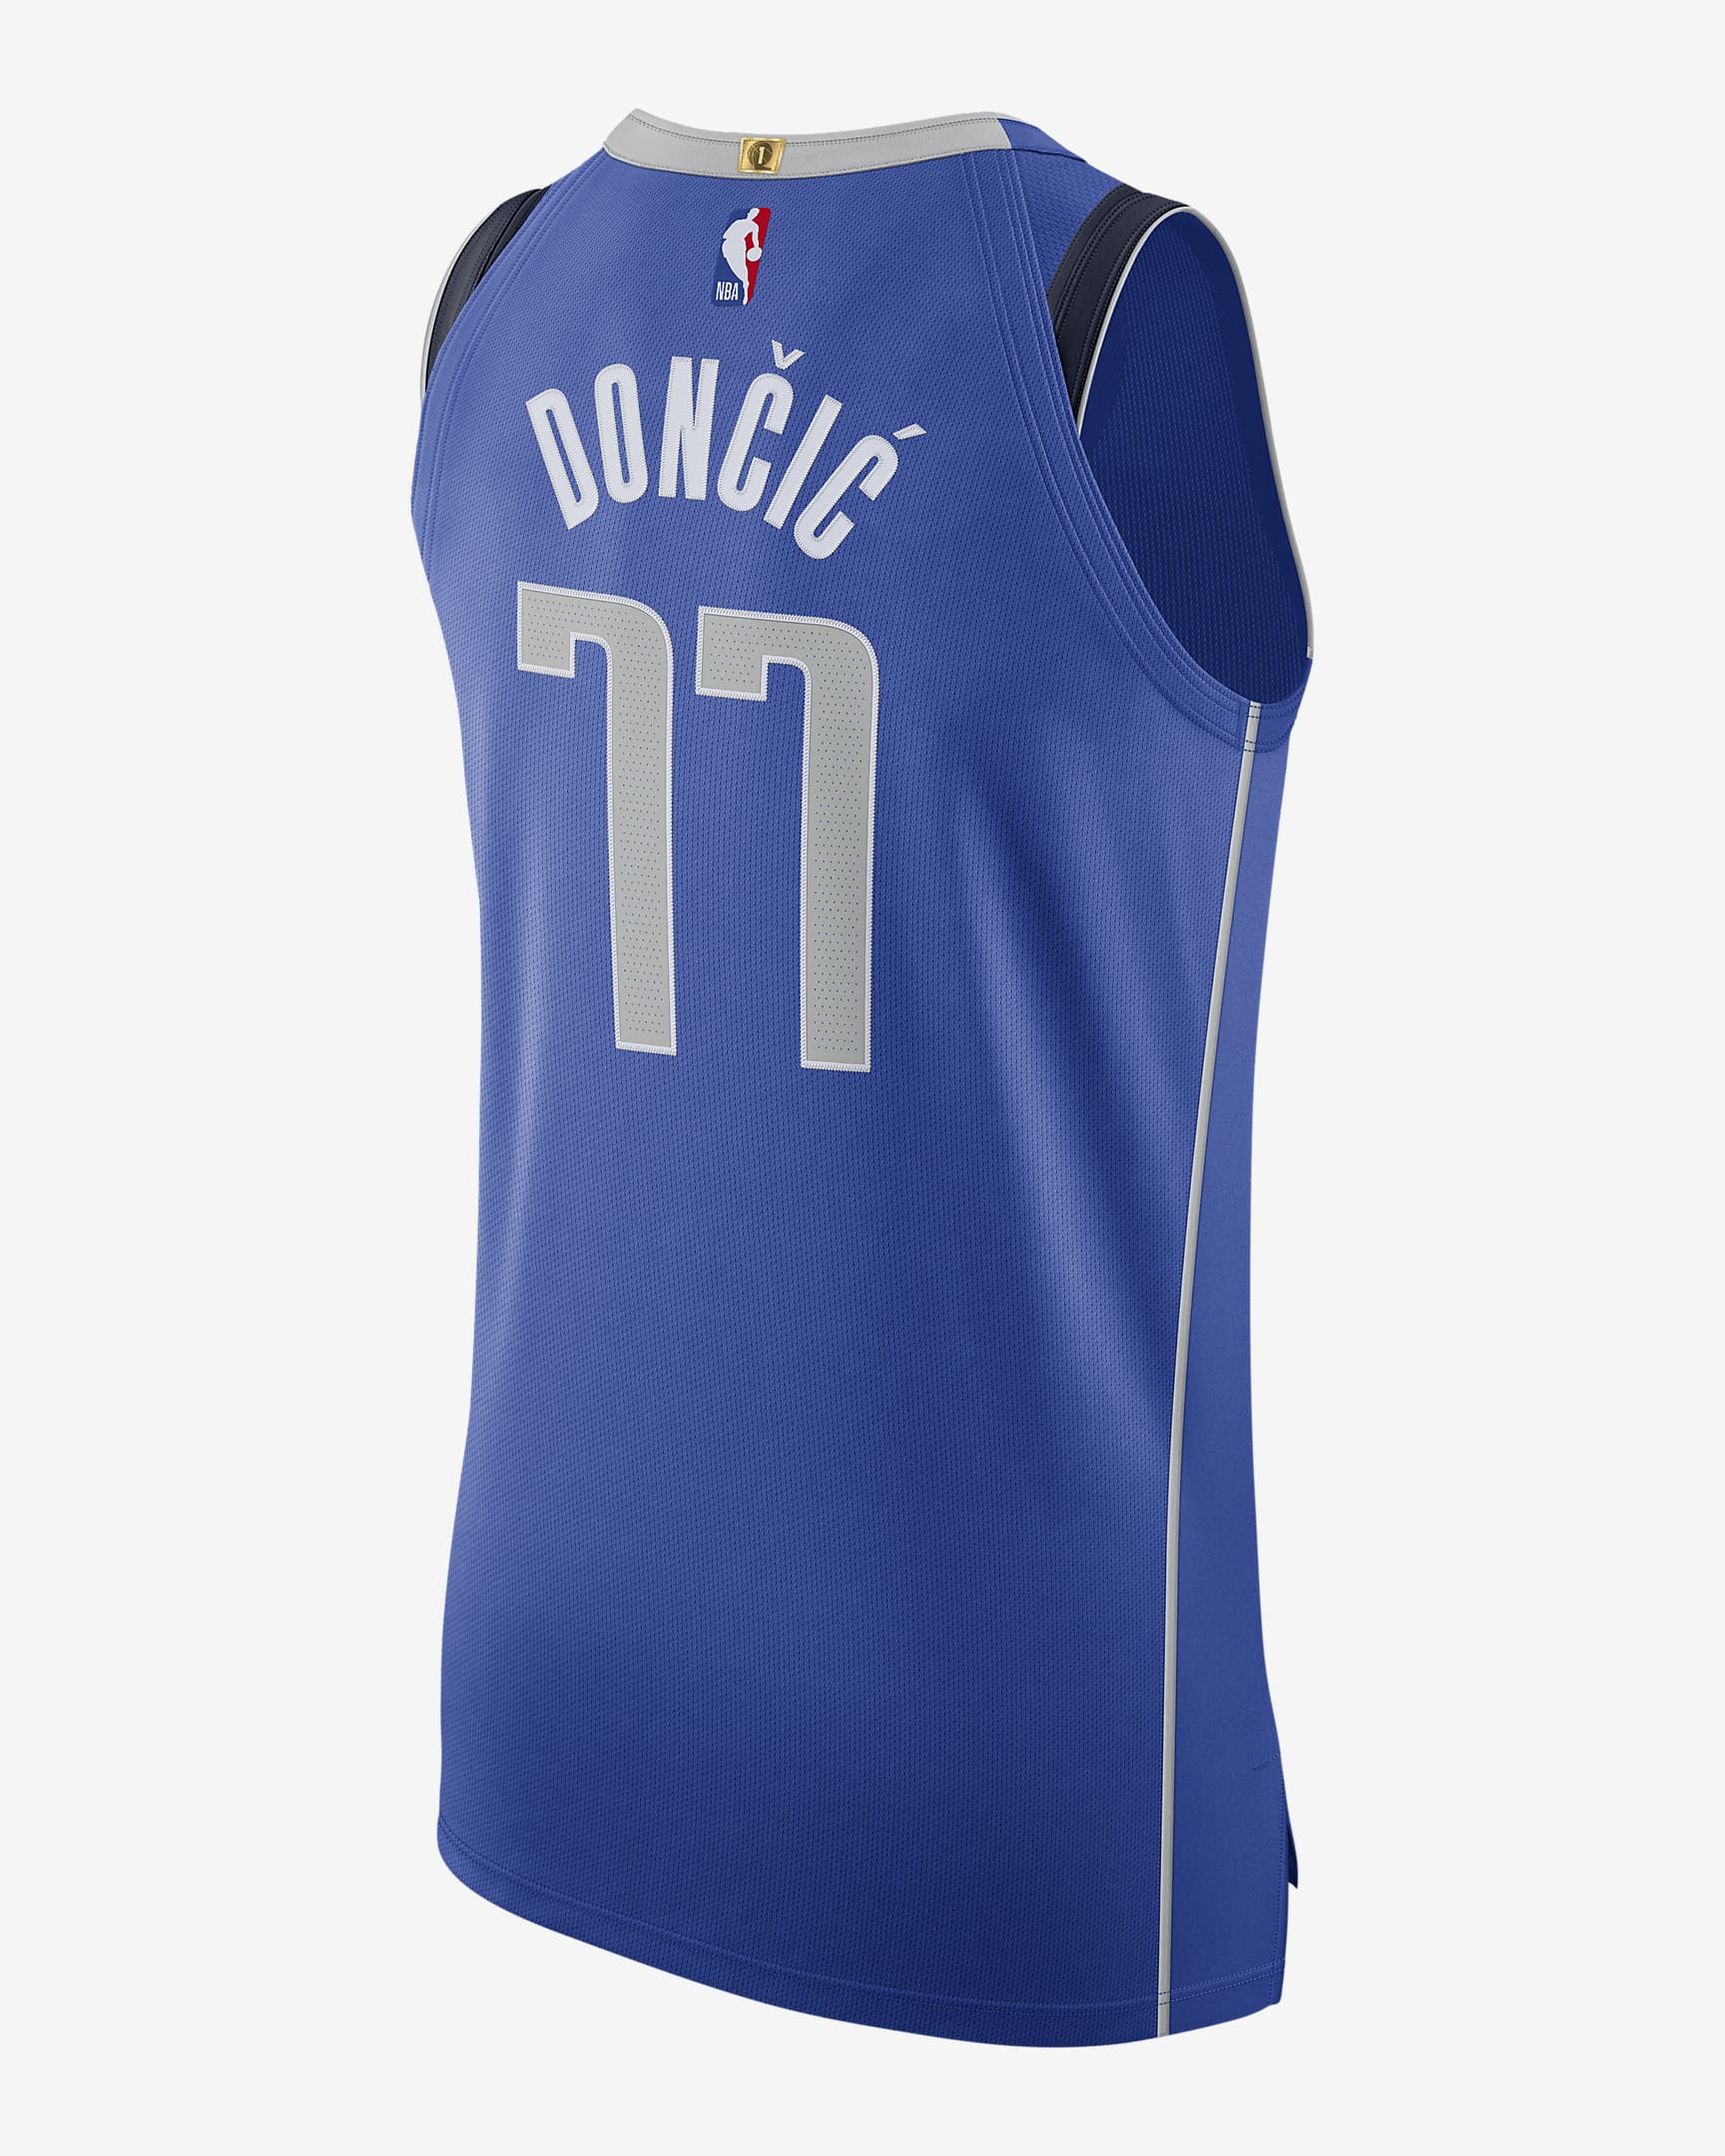 Jersey Nike de la NBA Authentic para hombre Luka Doncic Mavericks Icon ...